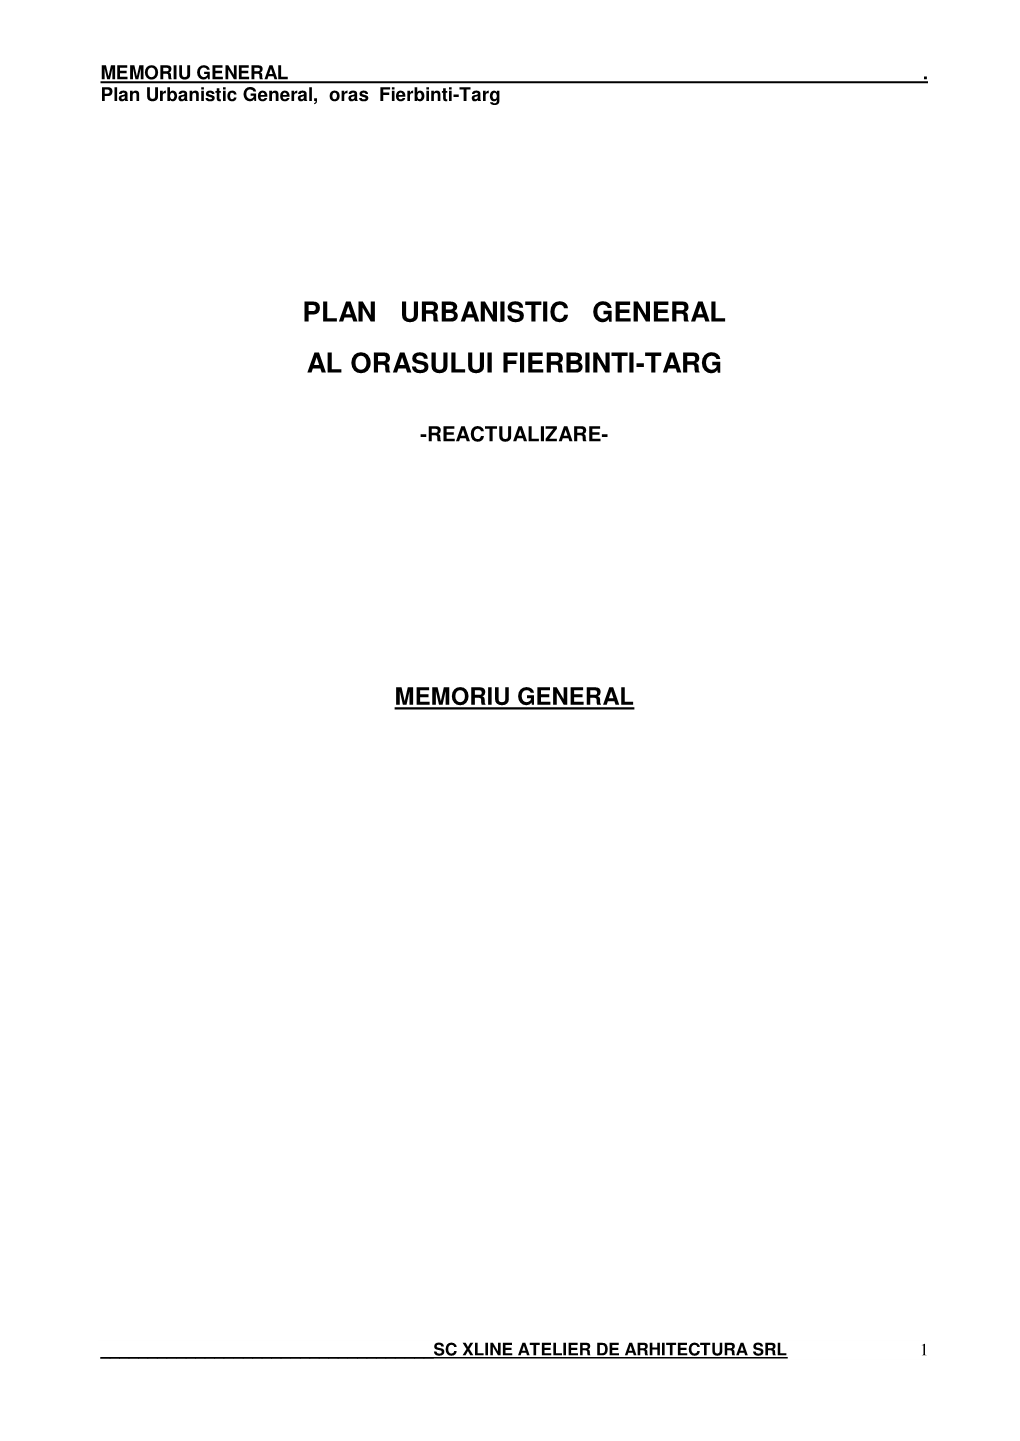 Plan Urbanistic General Al Orasului Fierbinti-Targ